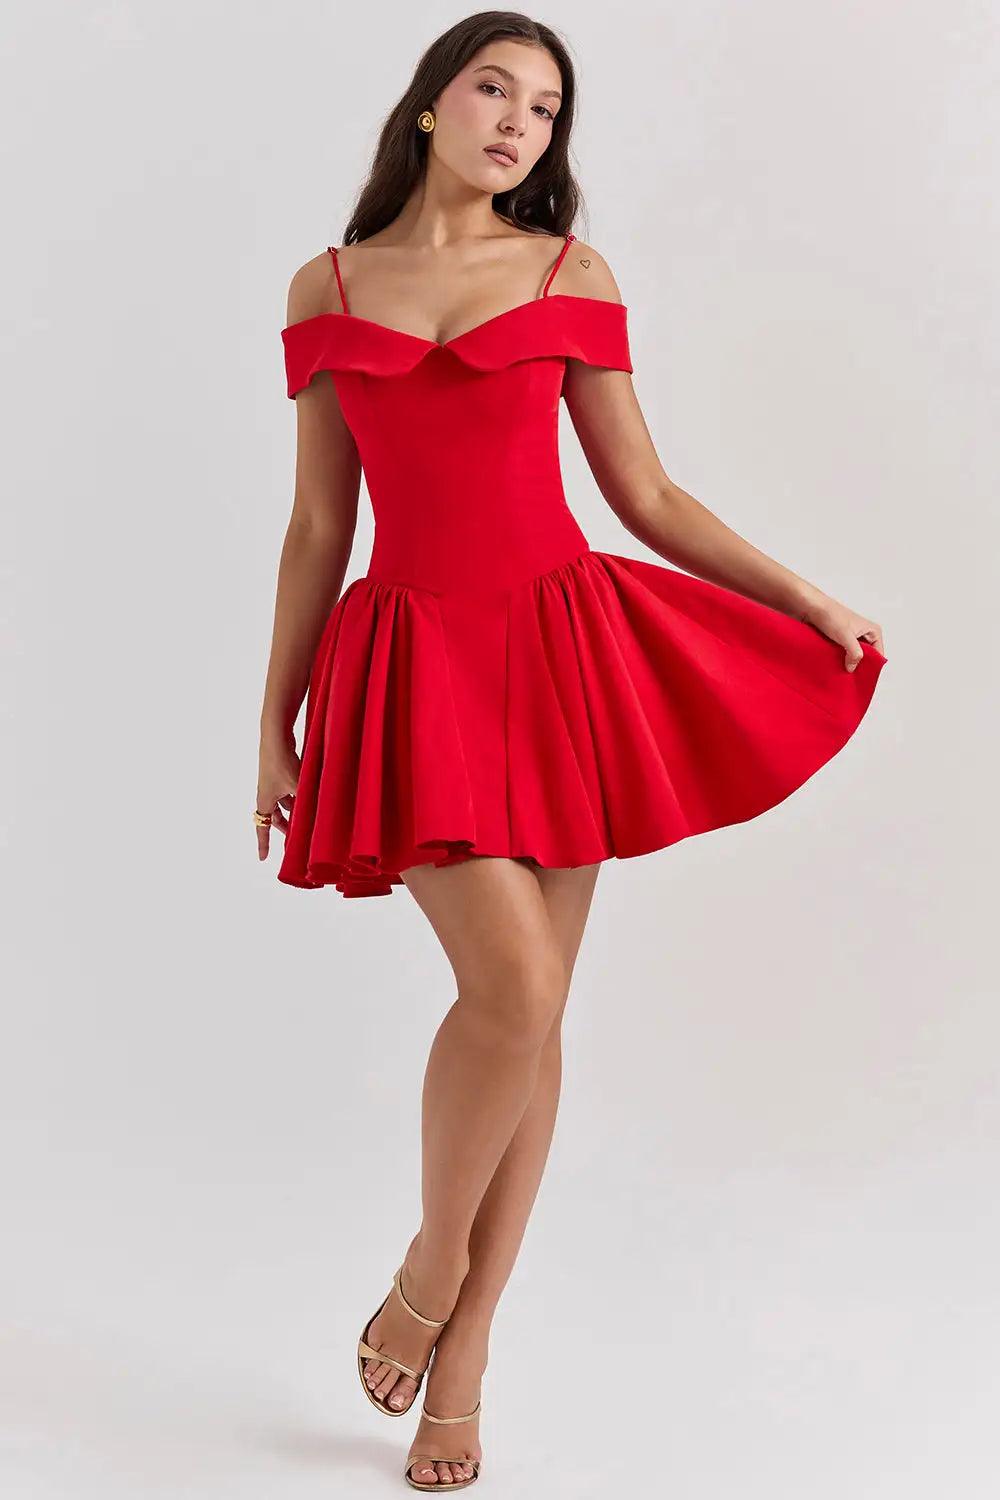 Romantic Dress For Women - ACO Marketplace